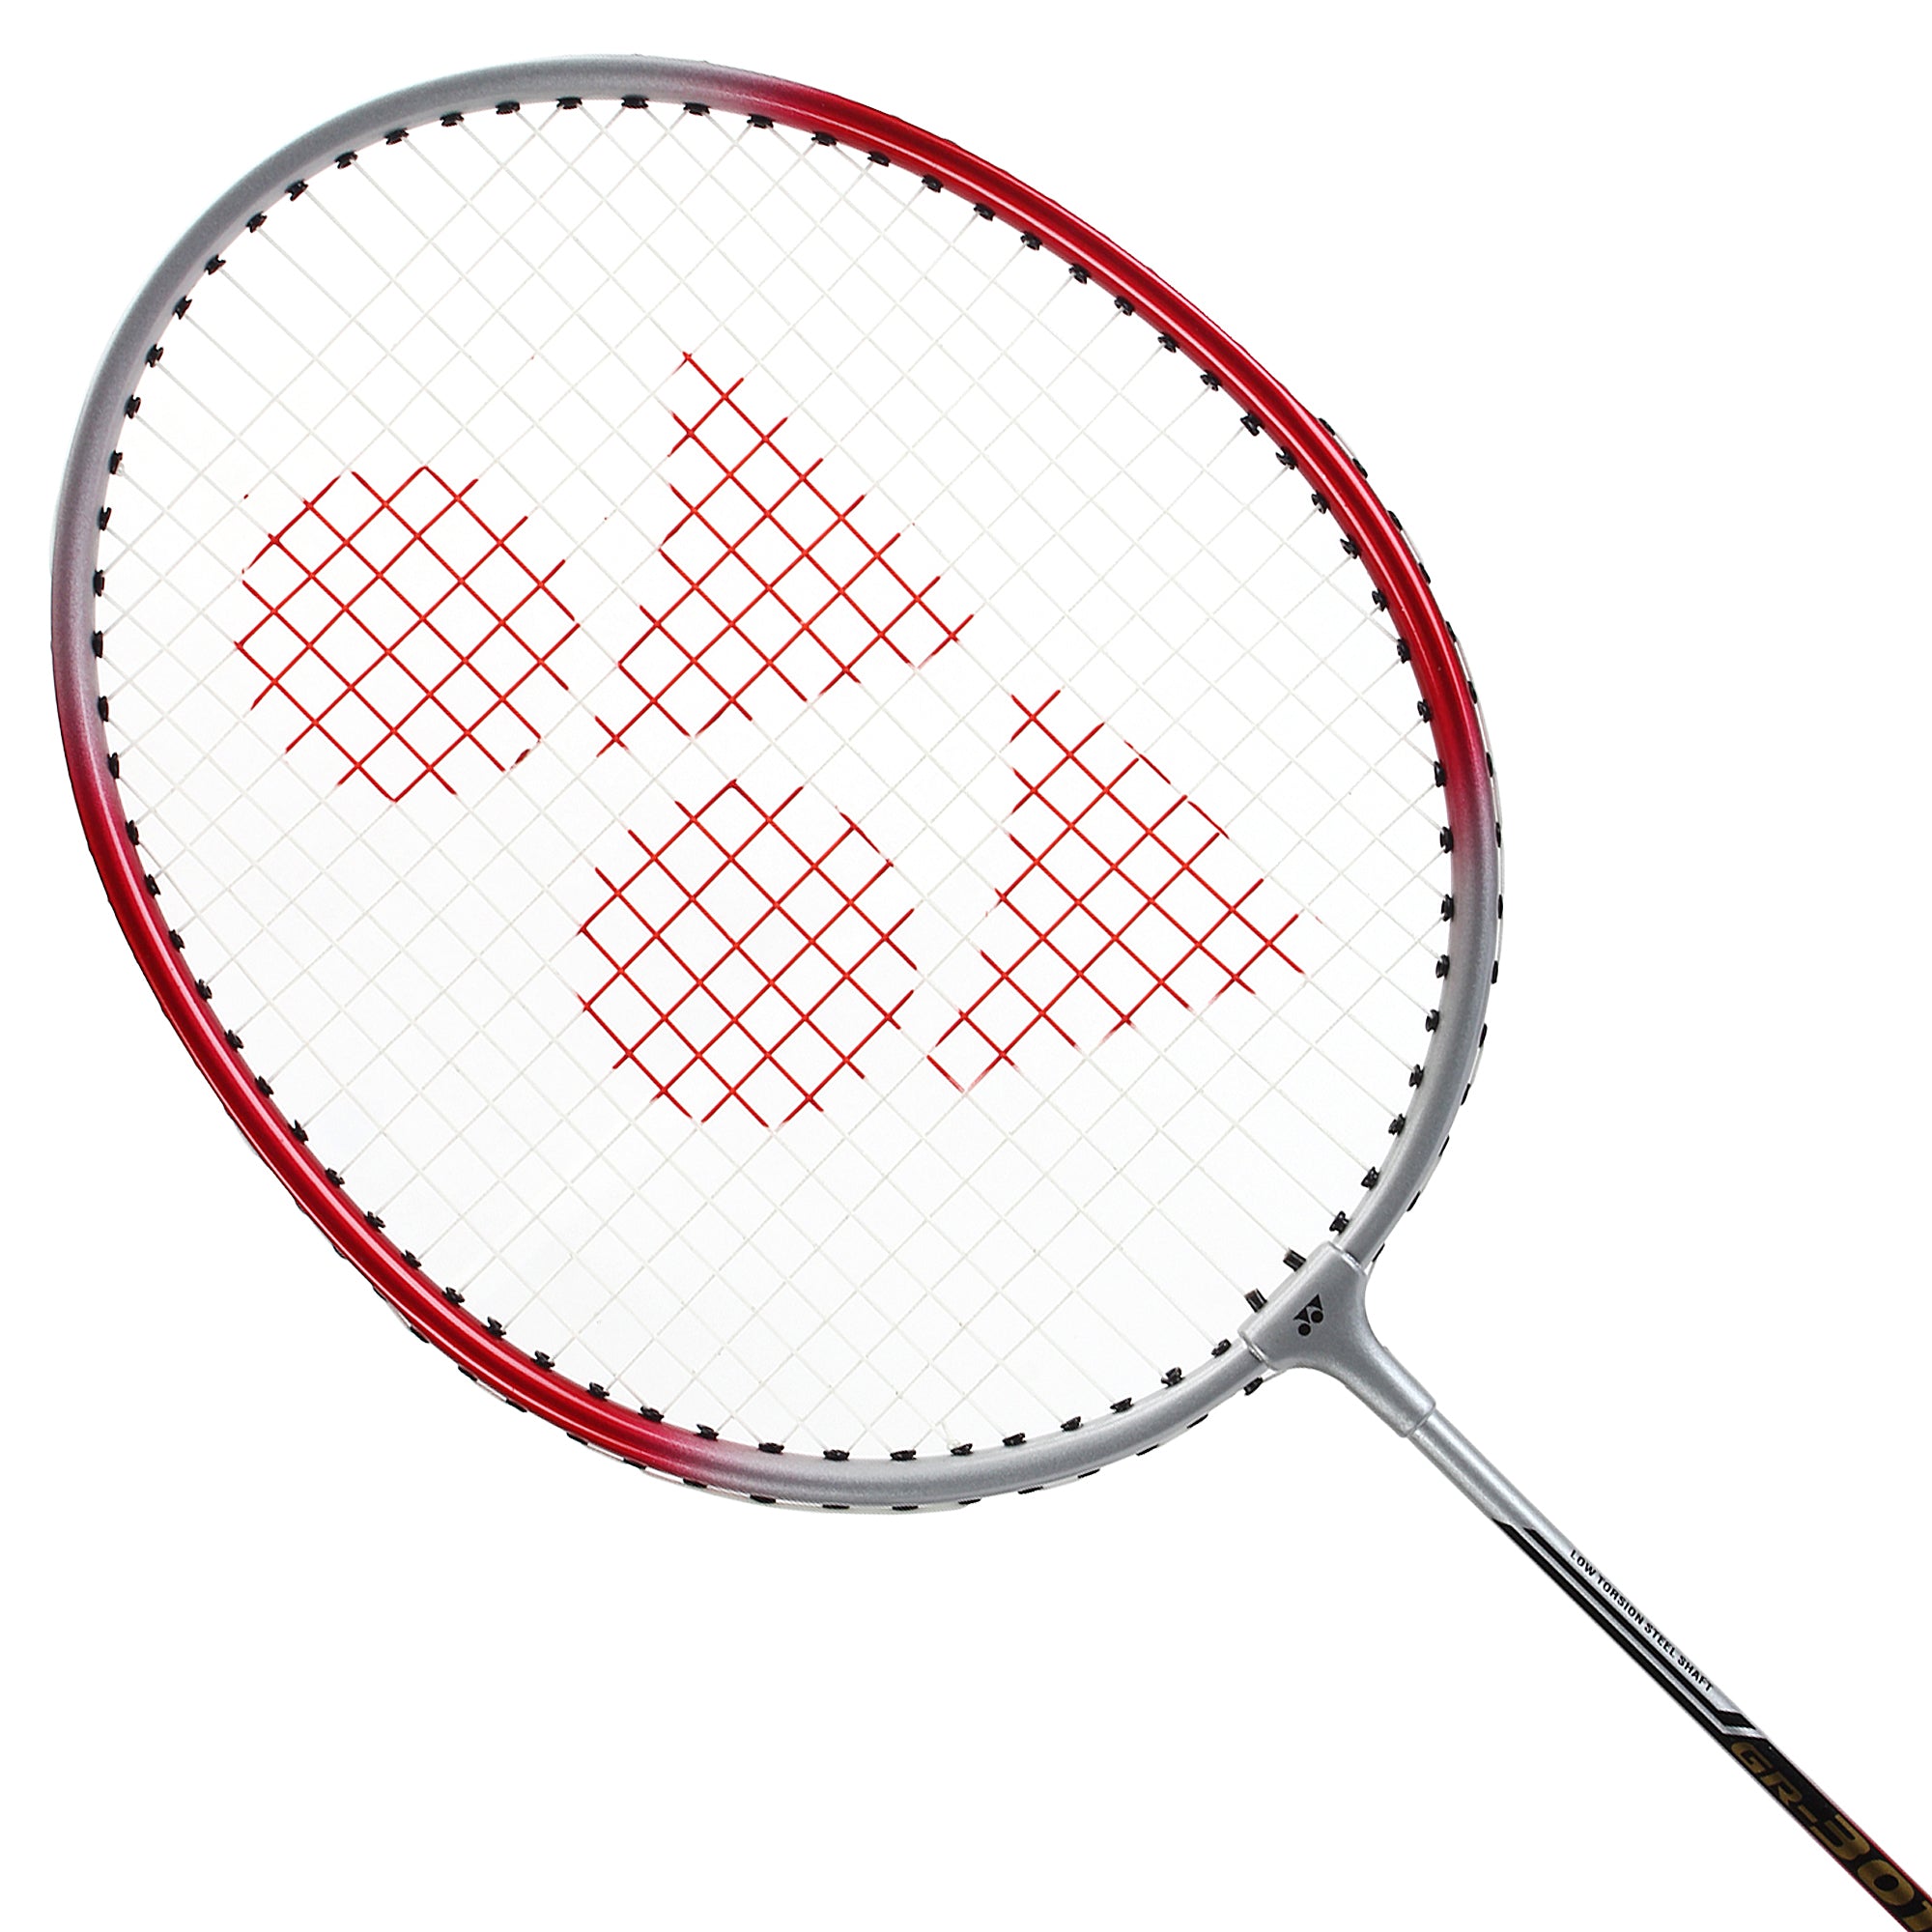 Yonex GR 301 Combo Badminton Racket